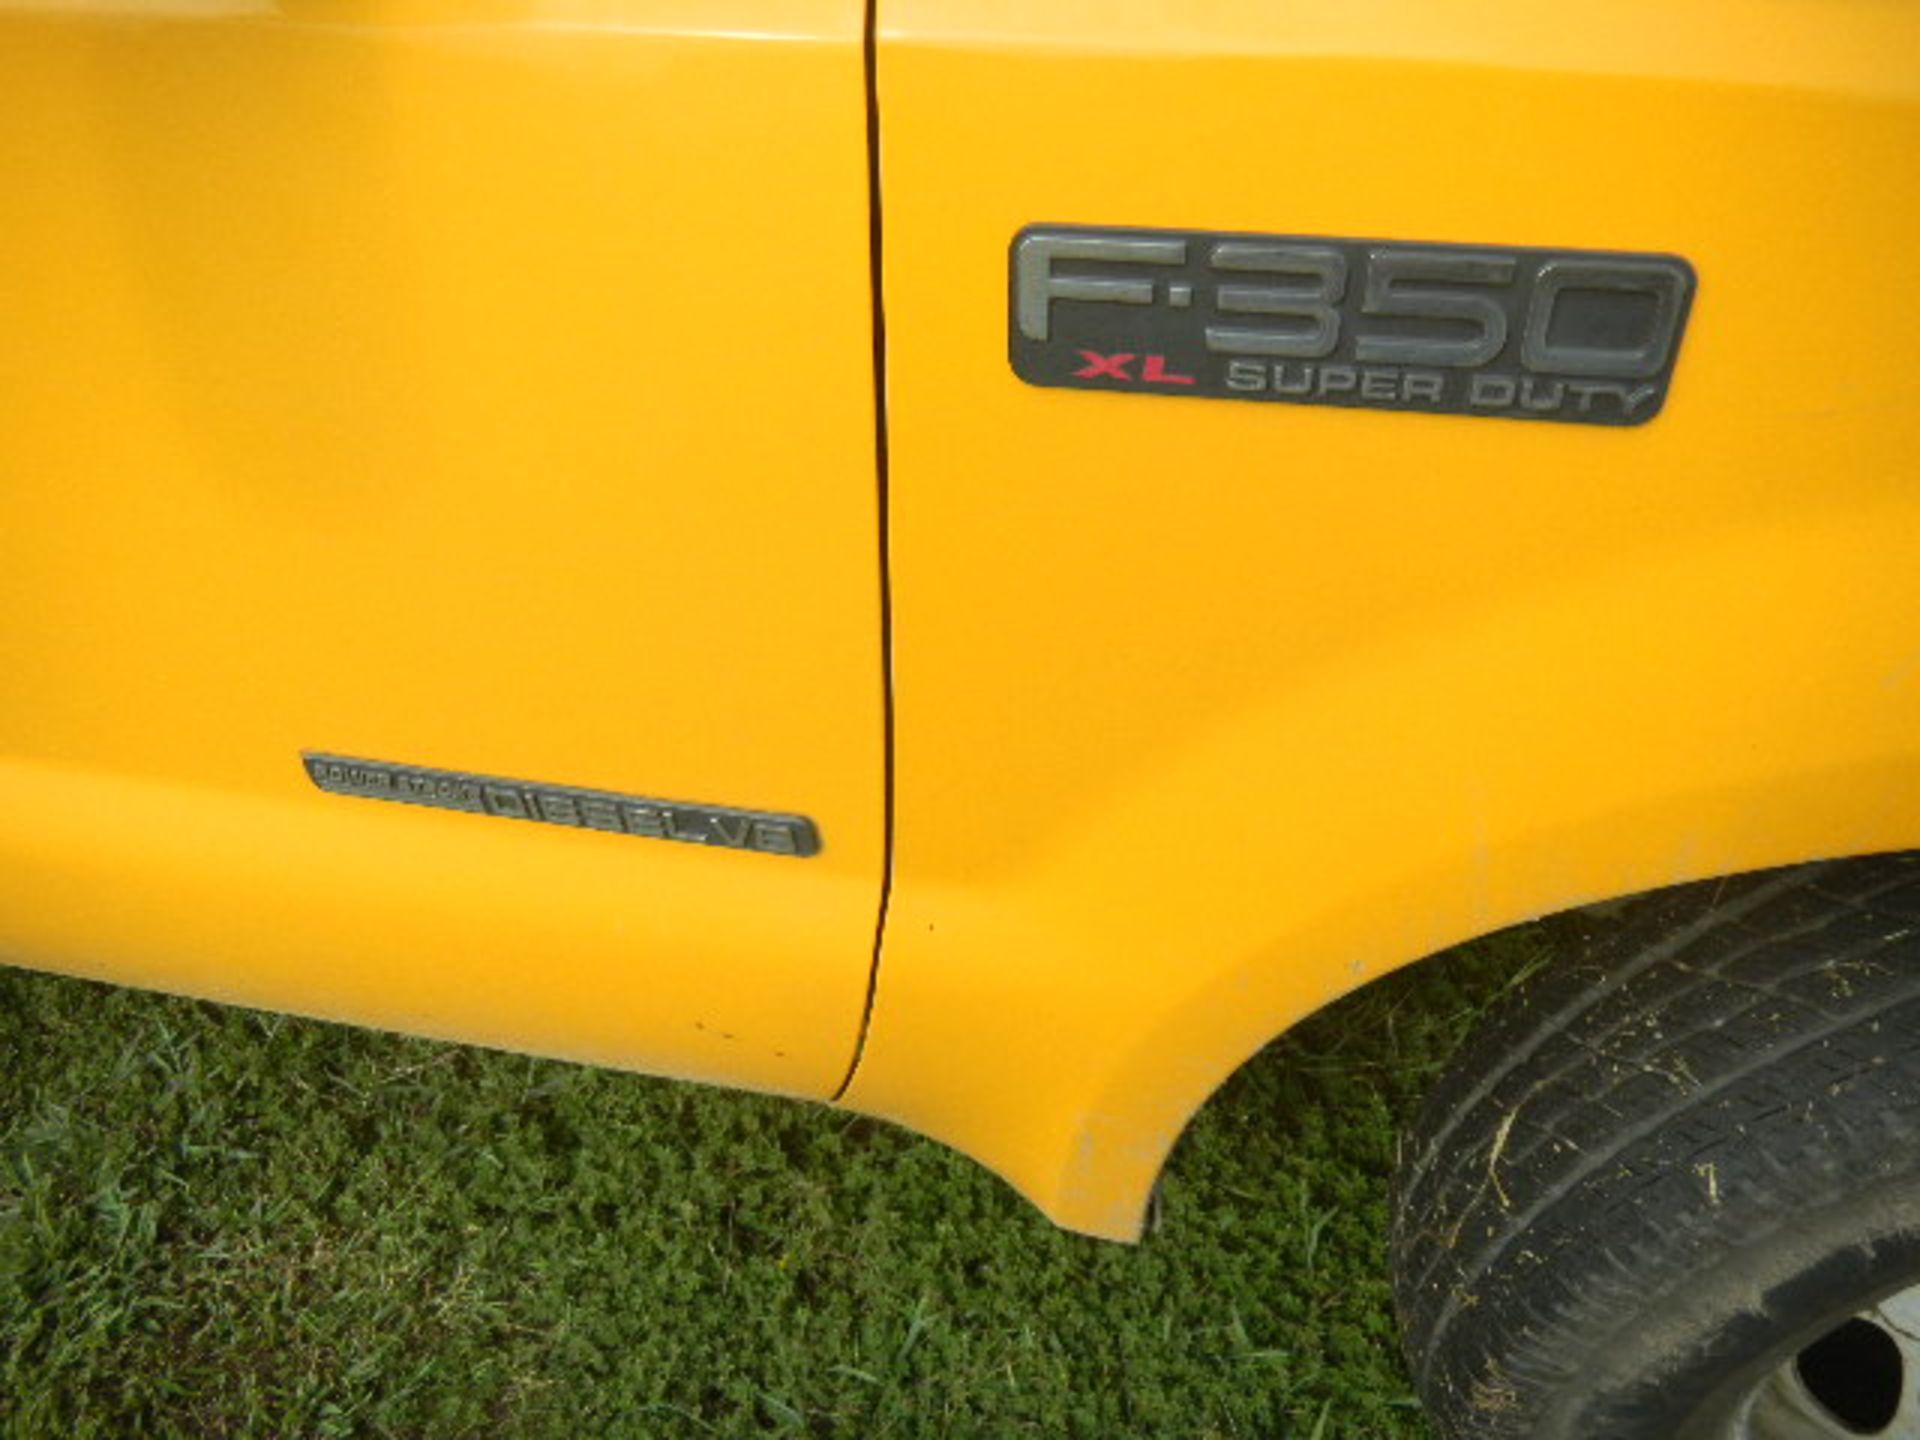 2002 Ford F-350 Super Duty Truck (Yellow) - Asset I.D. #371 - Last of Vin (EC83734) - Image 5 of 5